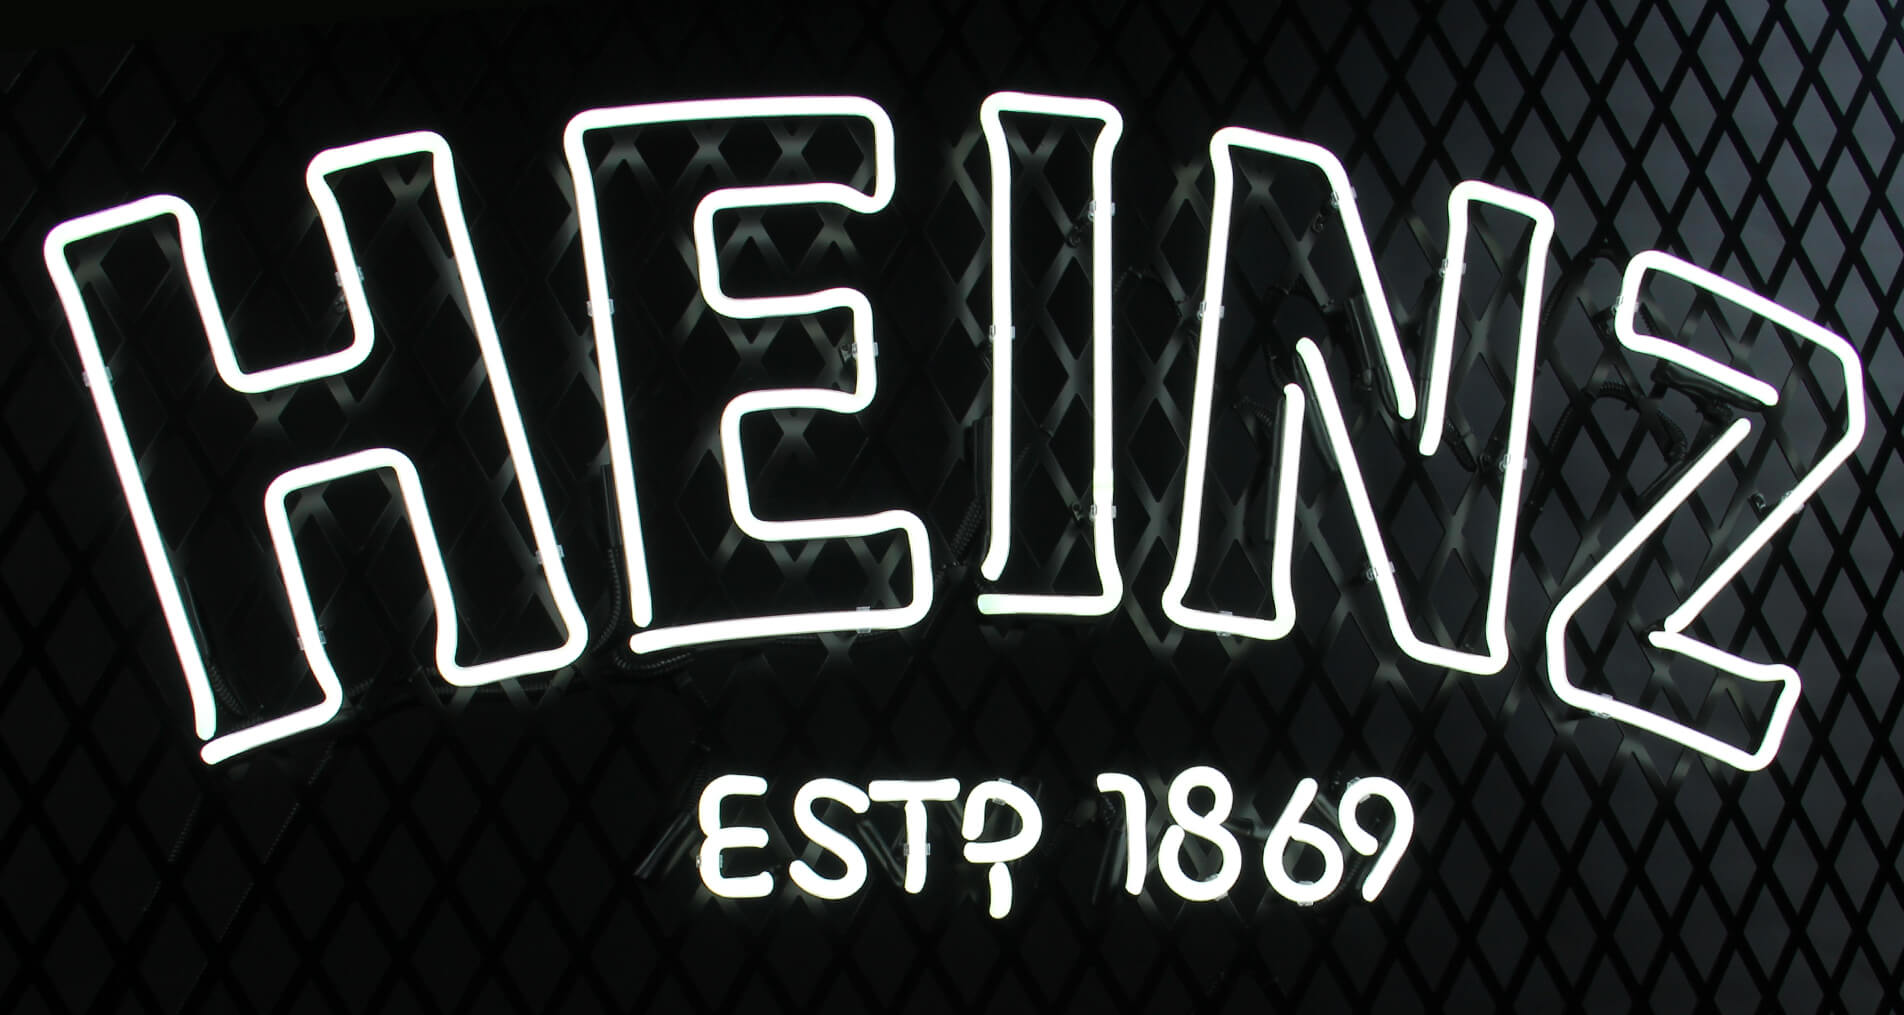 Heinz neon - Neón blanco heinz 1896